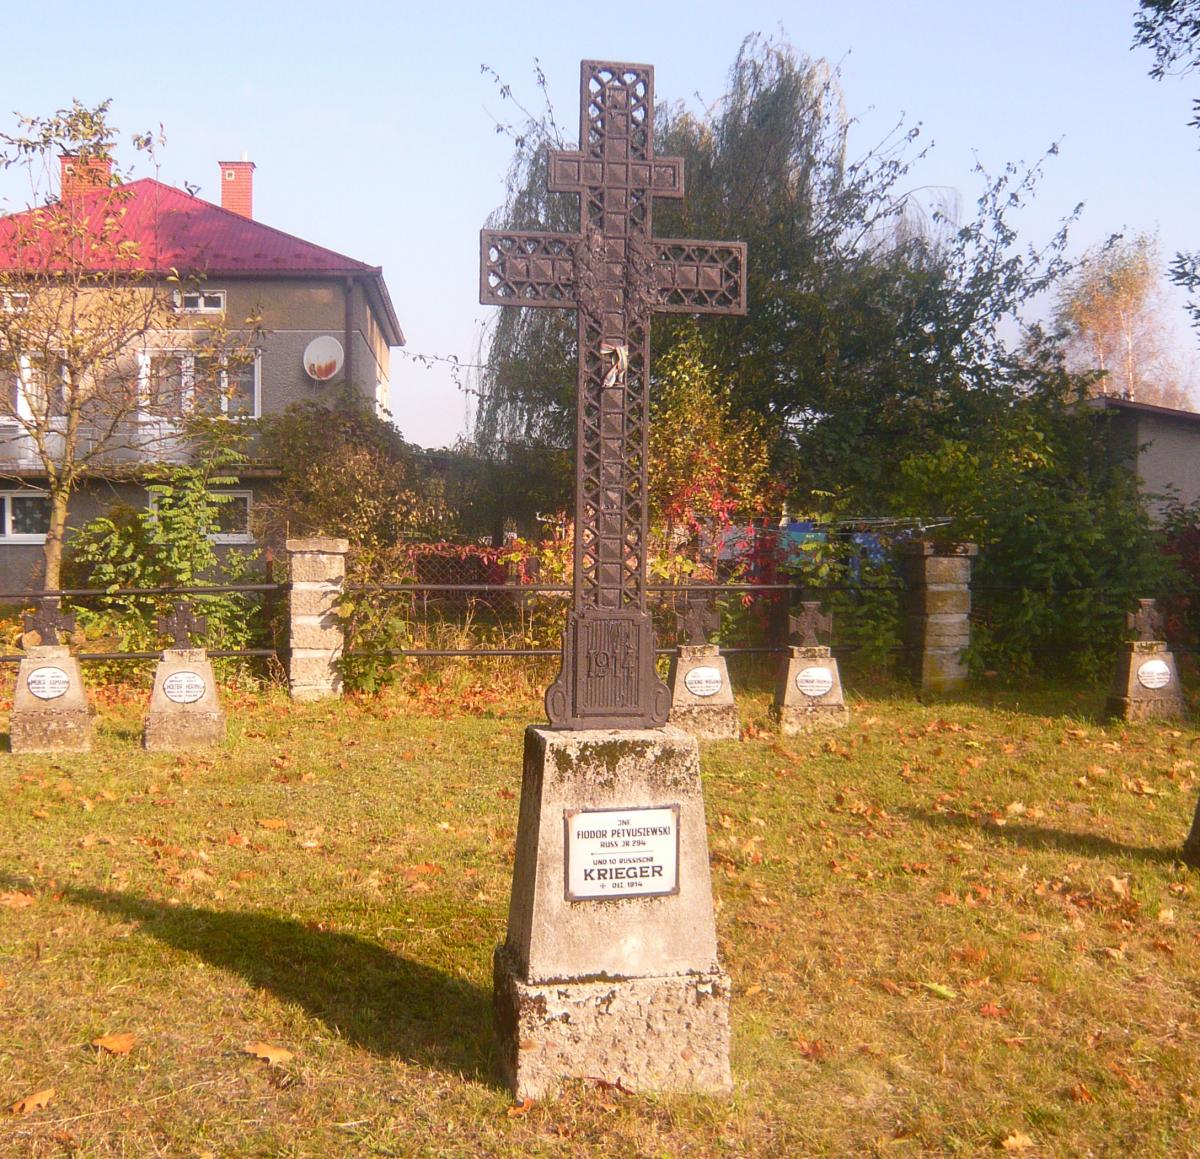 Wikipedia, Self-published work, World War I Cemetery nr 269 in Niwka